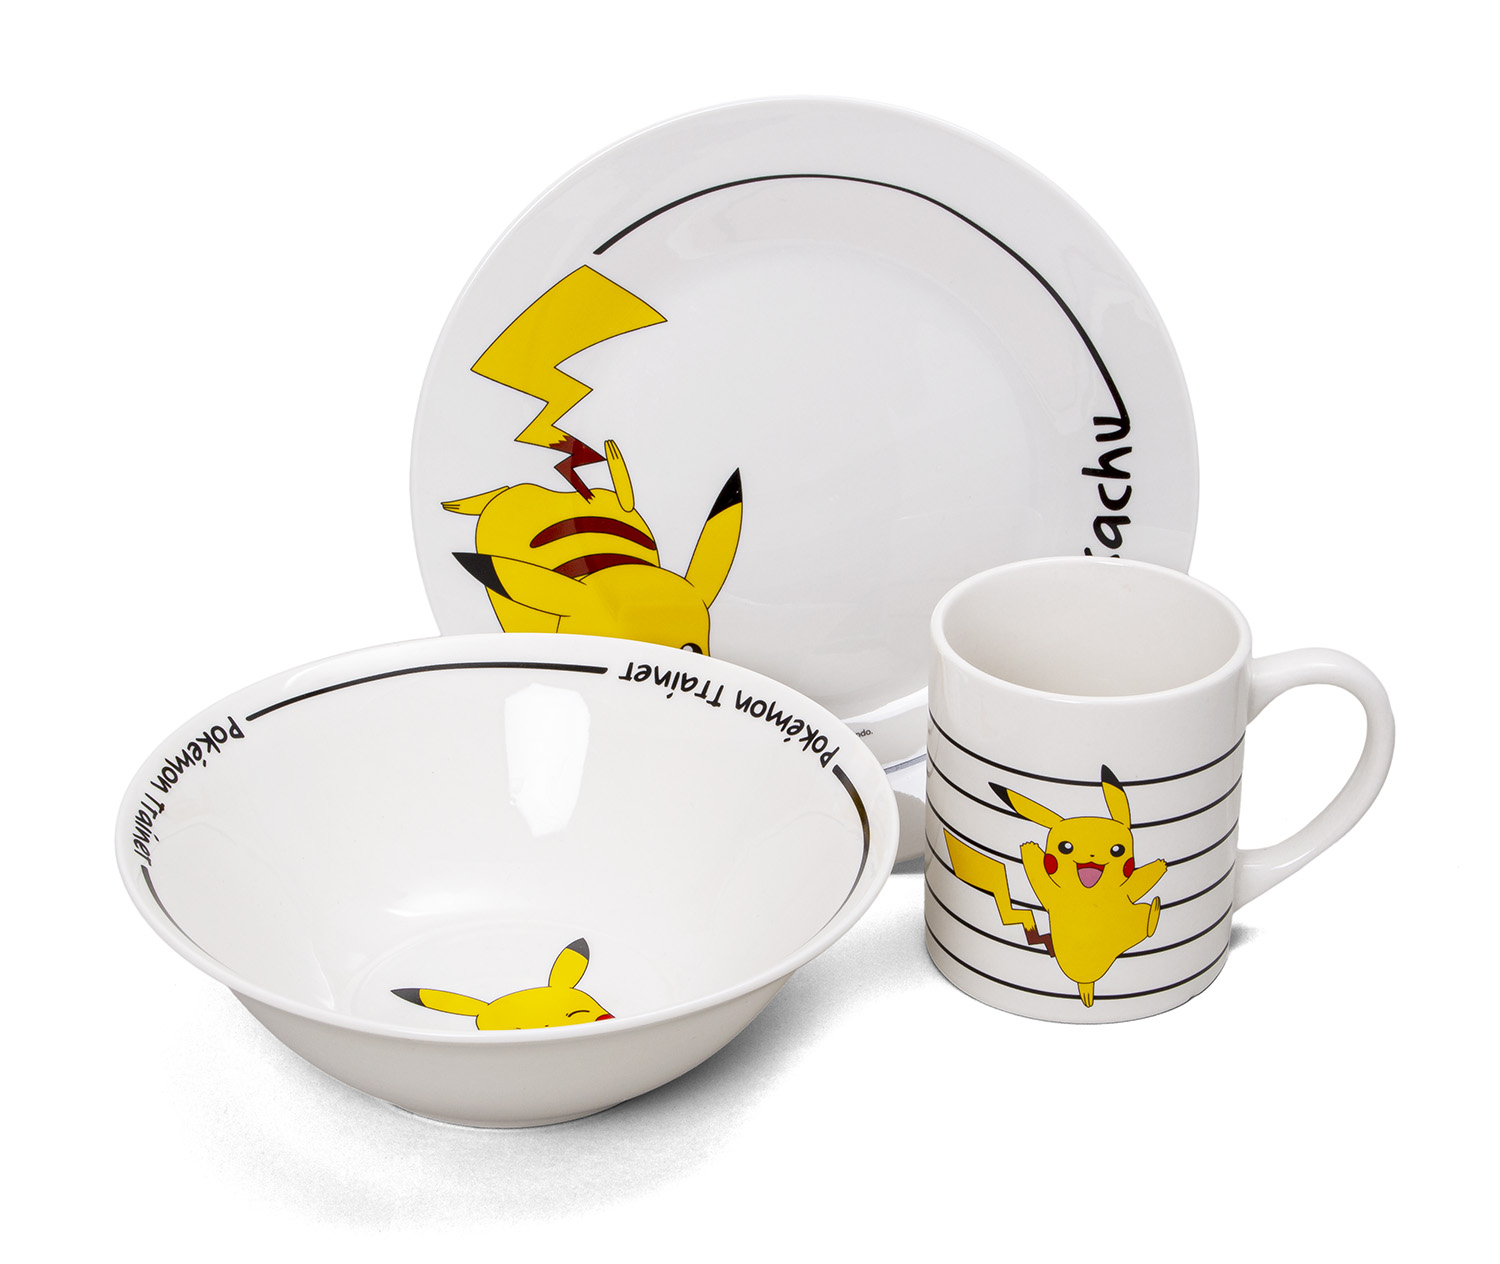 Frühstücksset (Schale, Teller, Tasse) - Pokémon - Pikachu